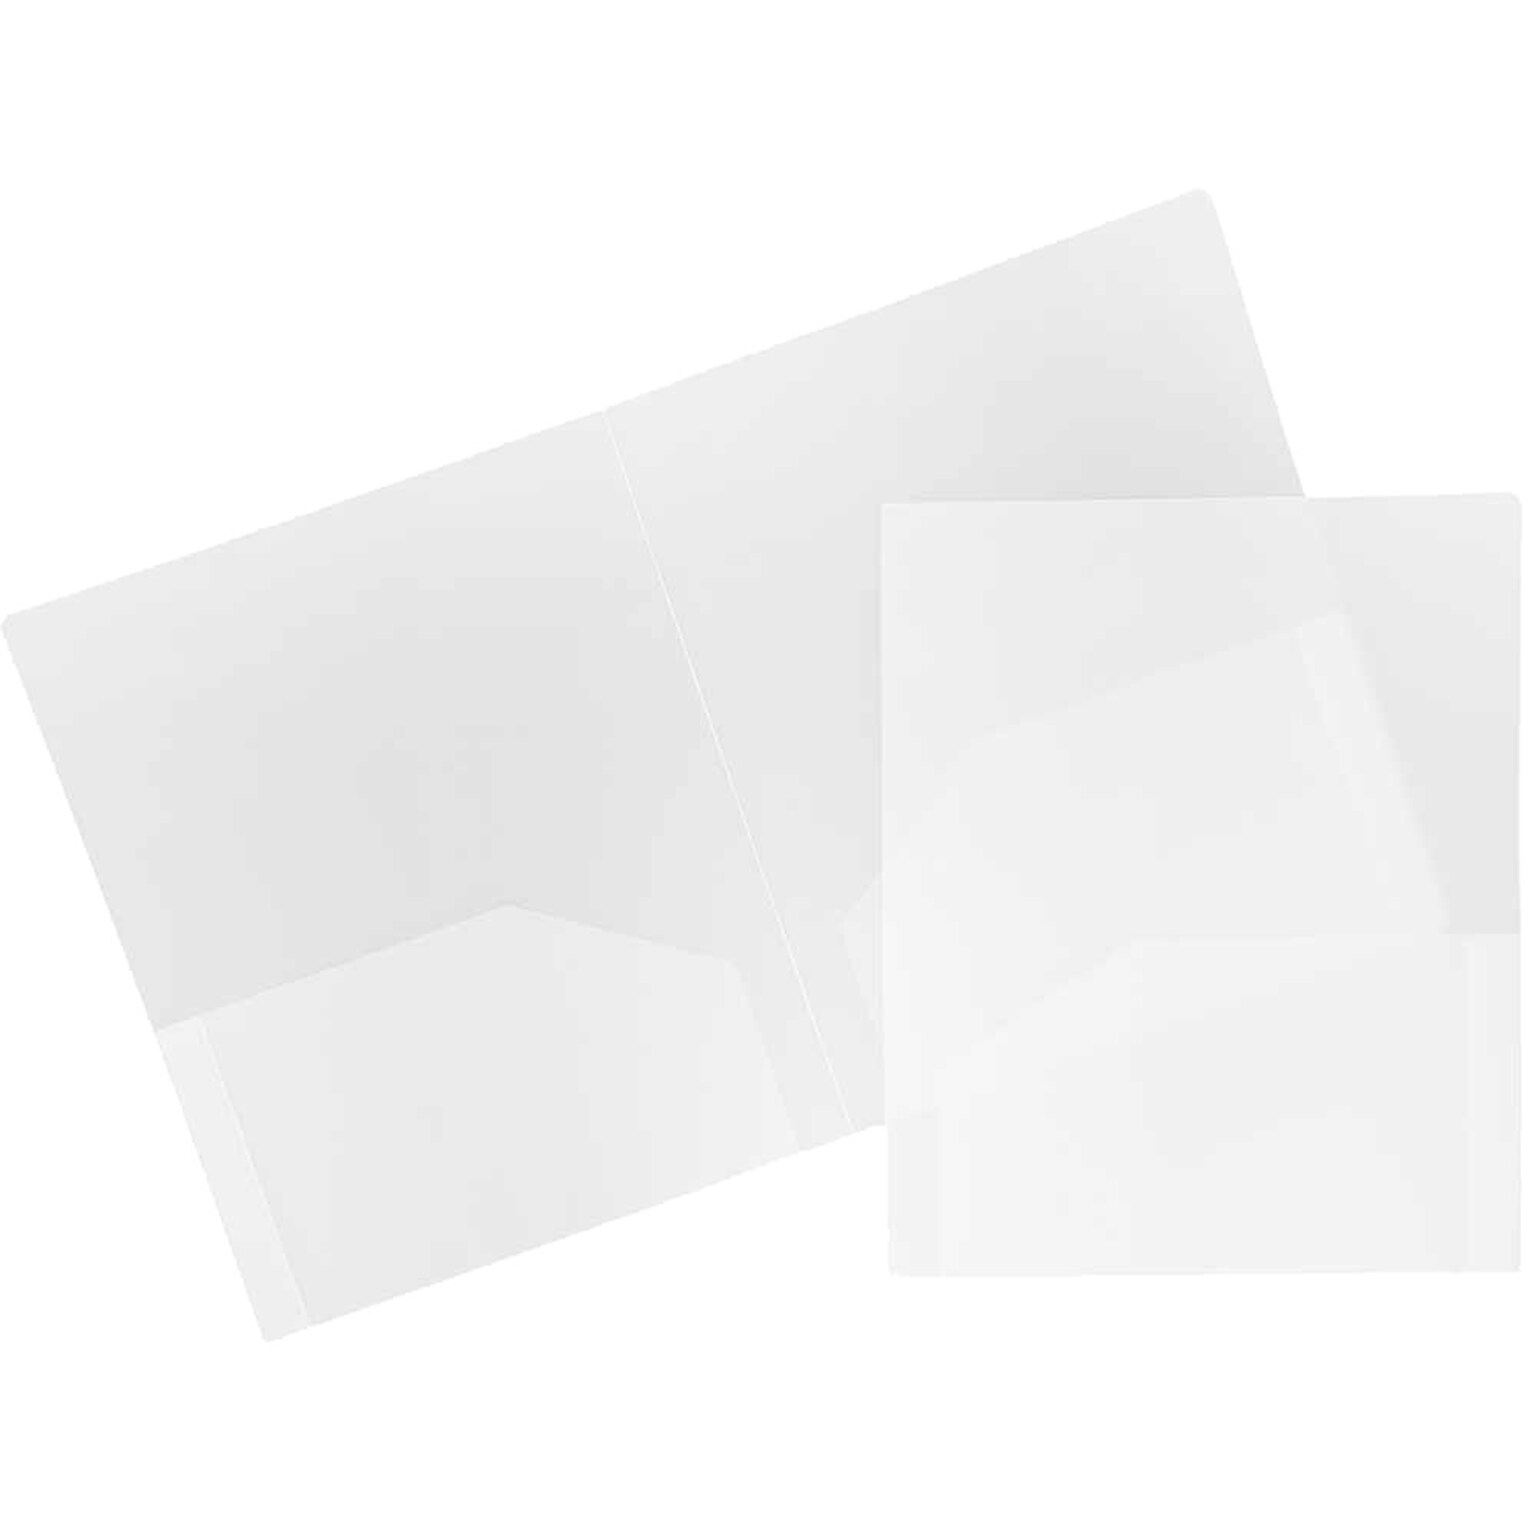 JAM Paper Heavy Duty 2-Pocket Presentation Folders, Clear, 6/Pack (3383HCL)